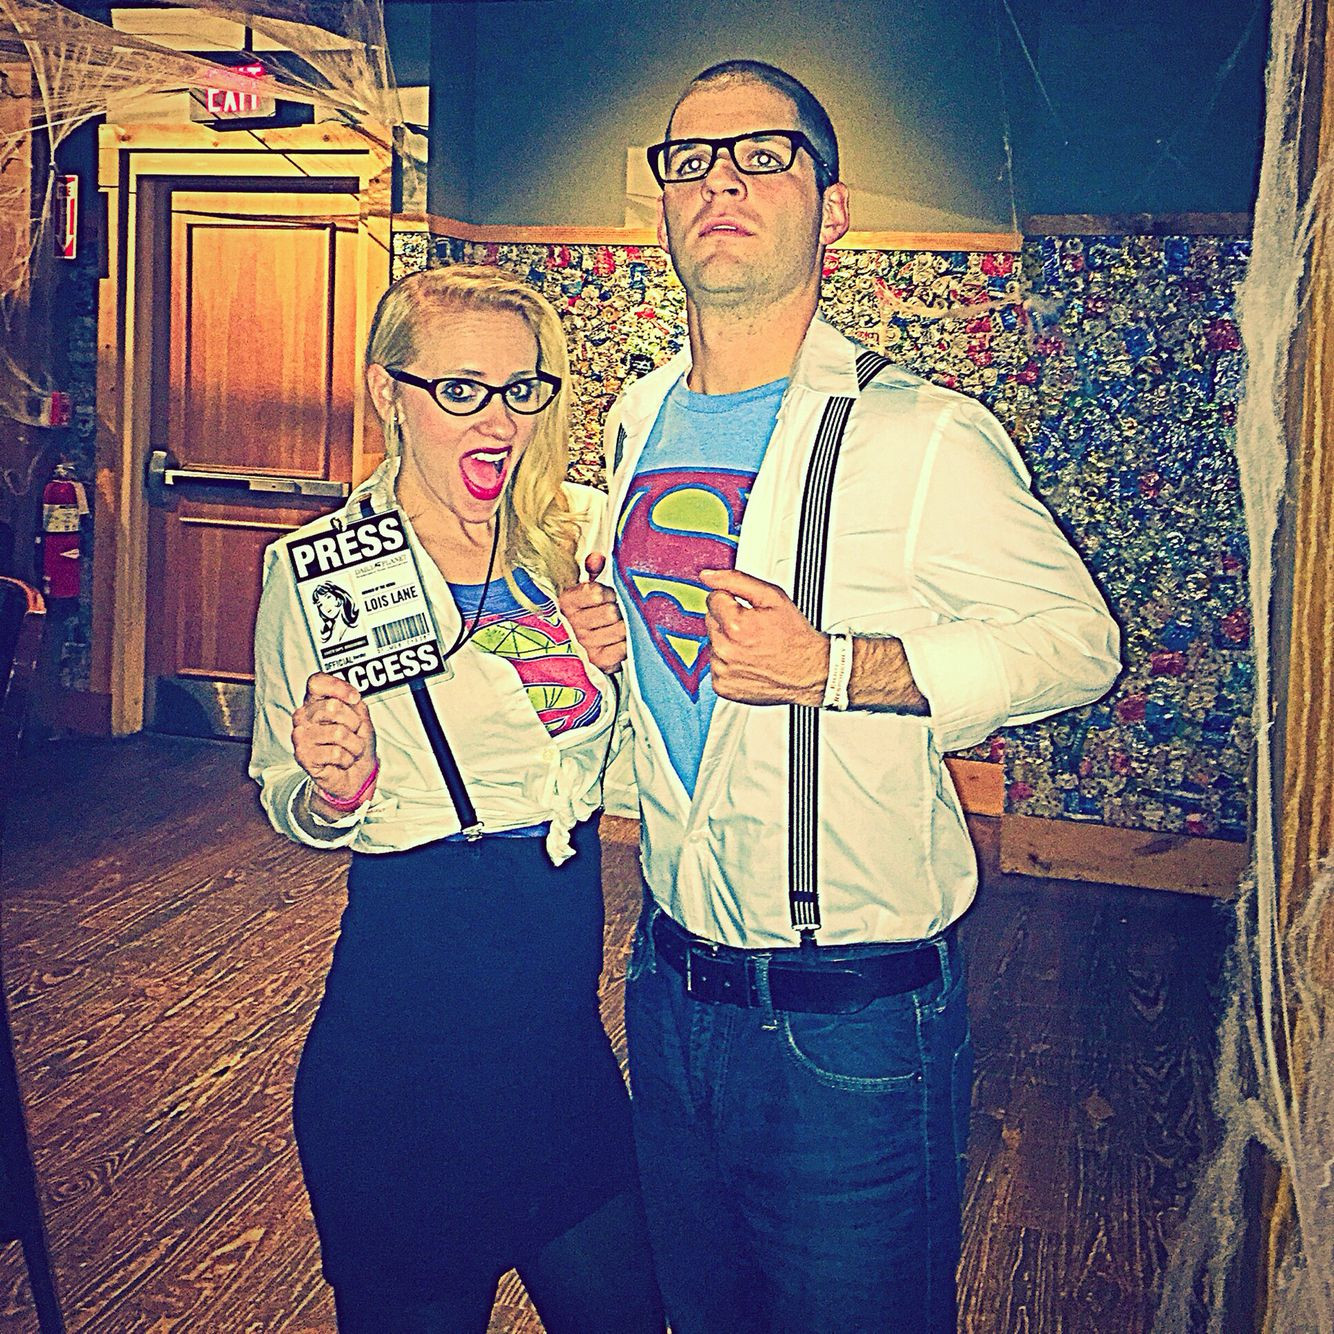 Best ideas about Clark Kent Costume DIY
. Save or Pin Clark Kent & Lois Lane diy costumes Halloween Now.